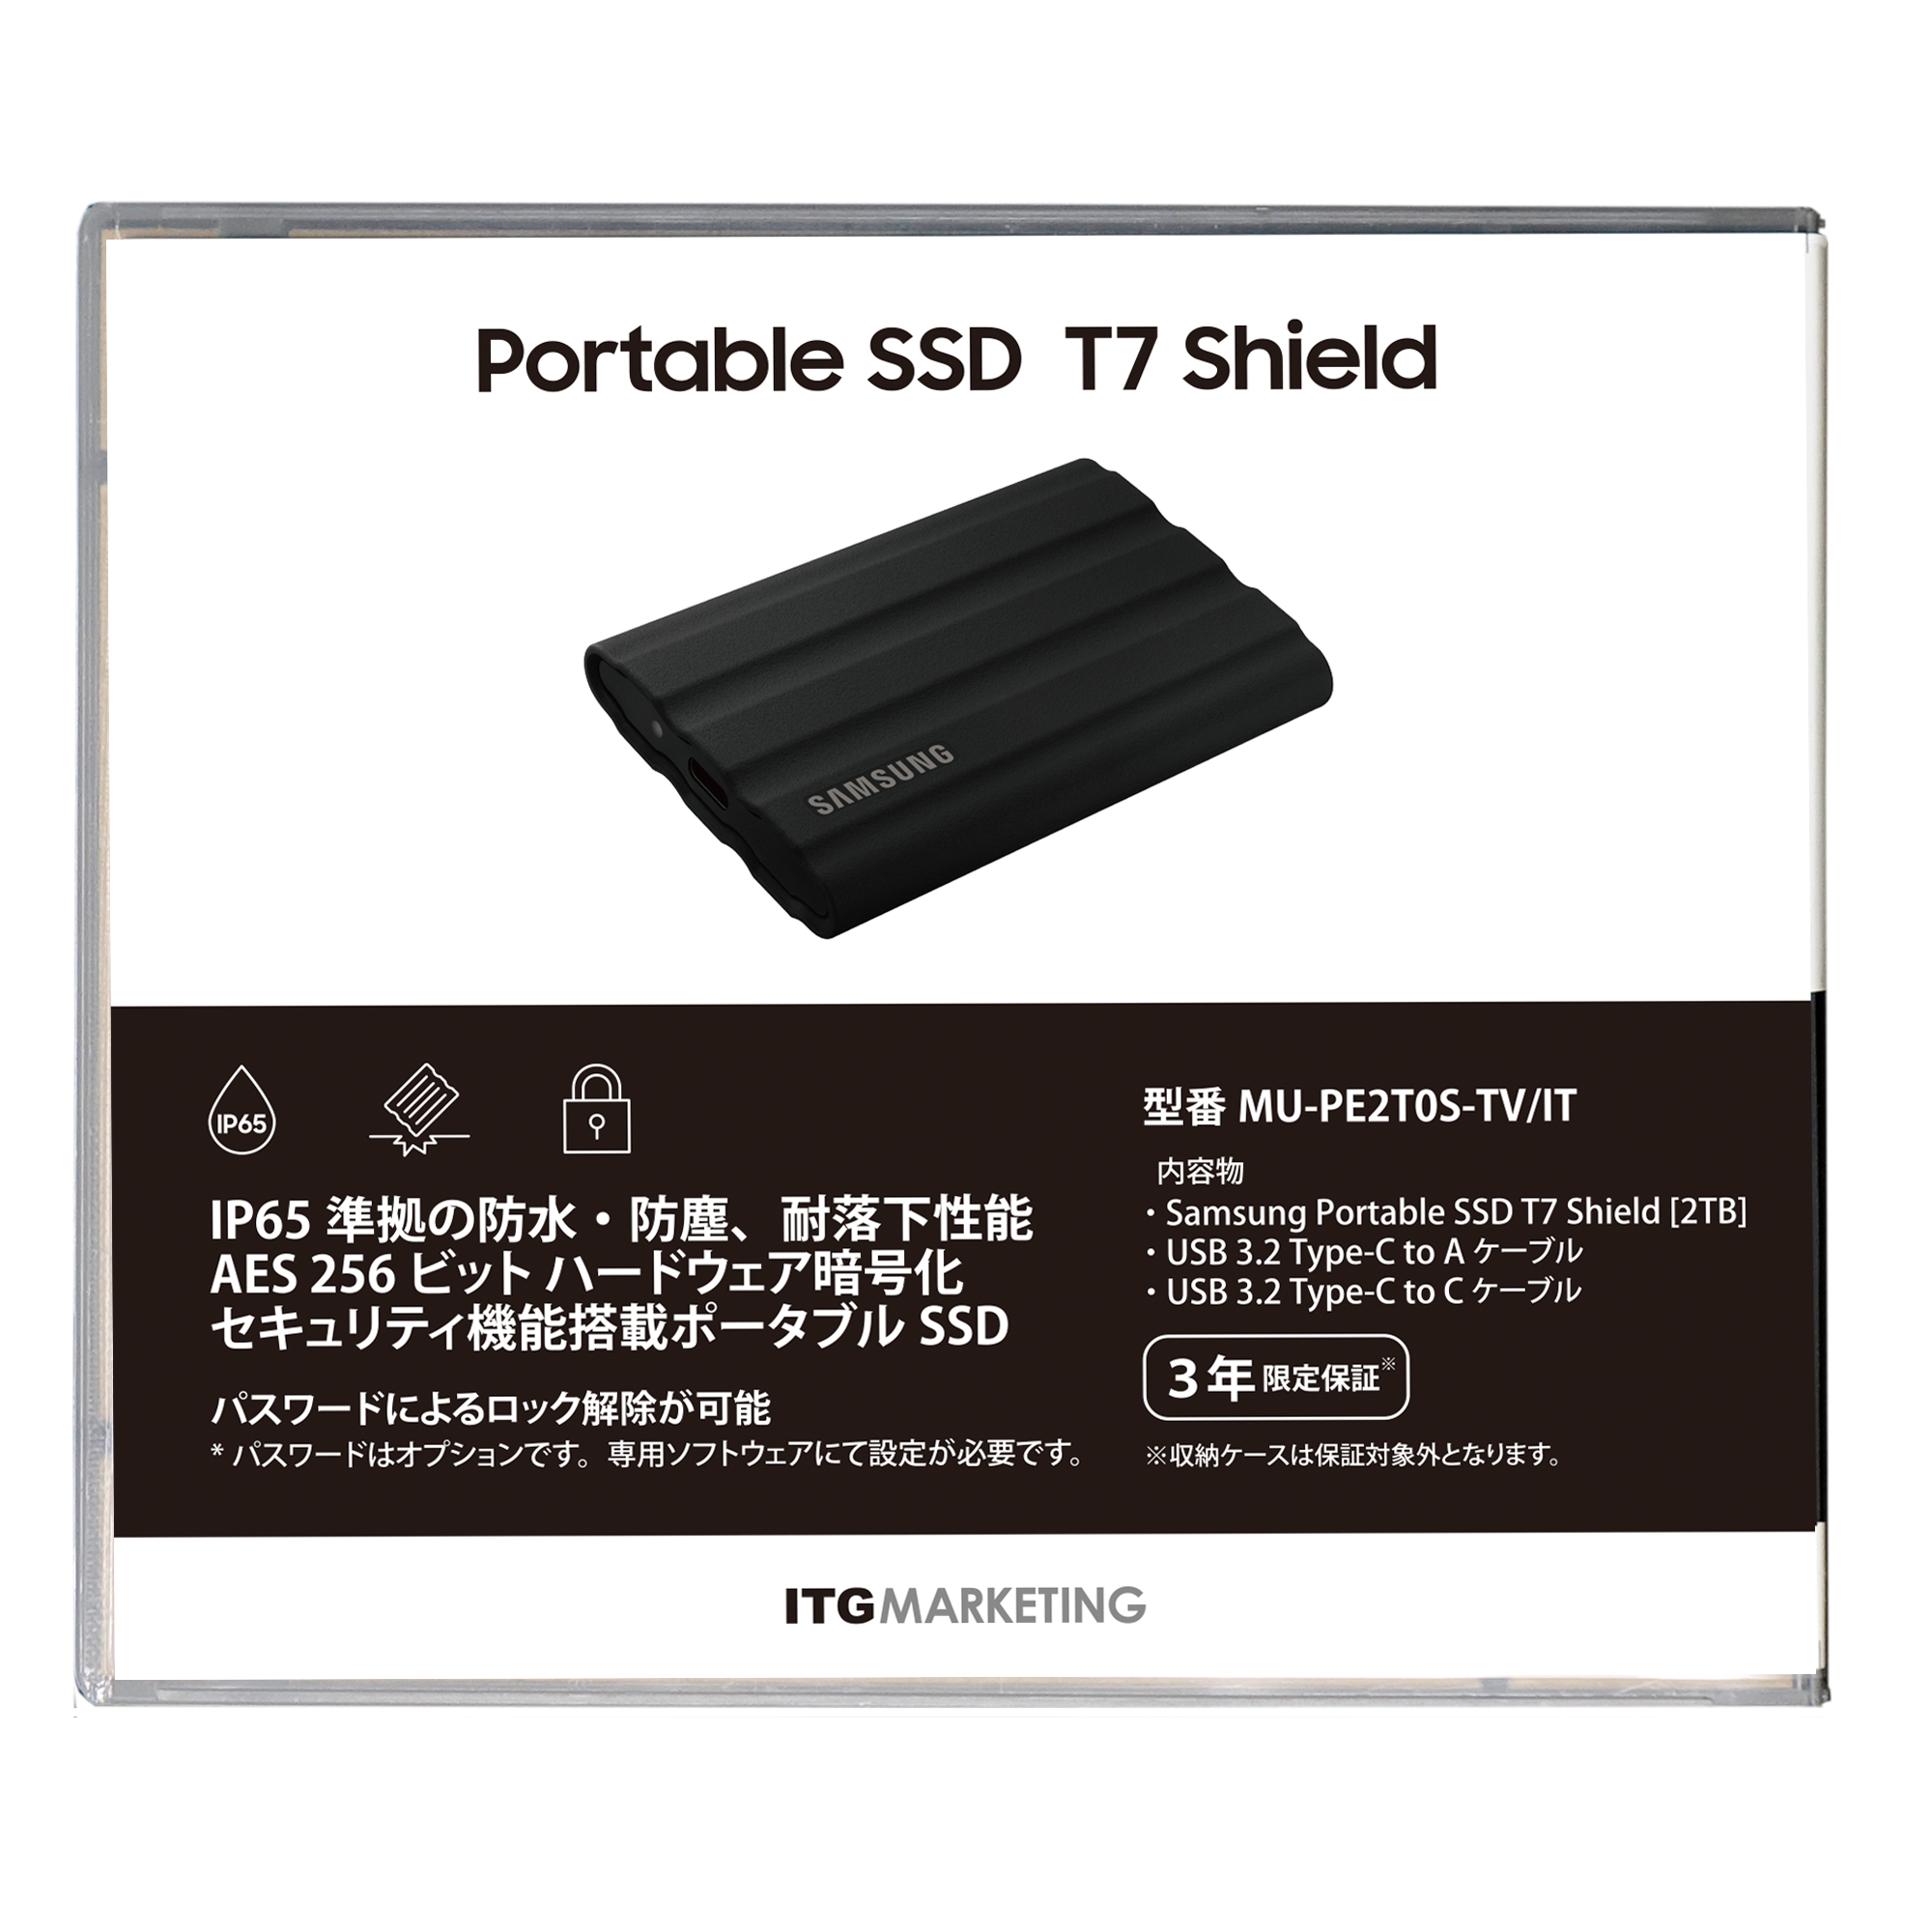 Portable SSD T7 Shield (2TB) 放送局向け専用ケース入りモデル | ITG